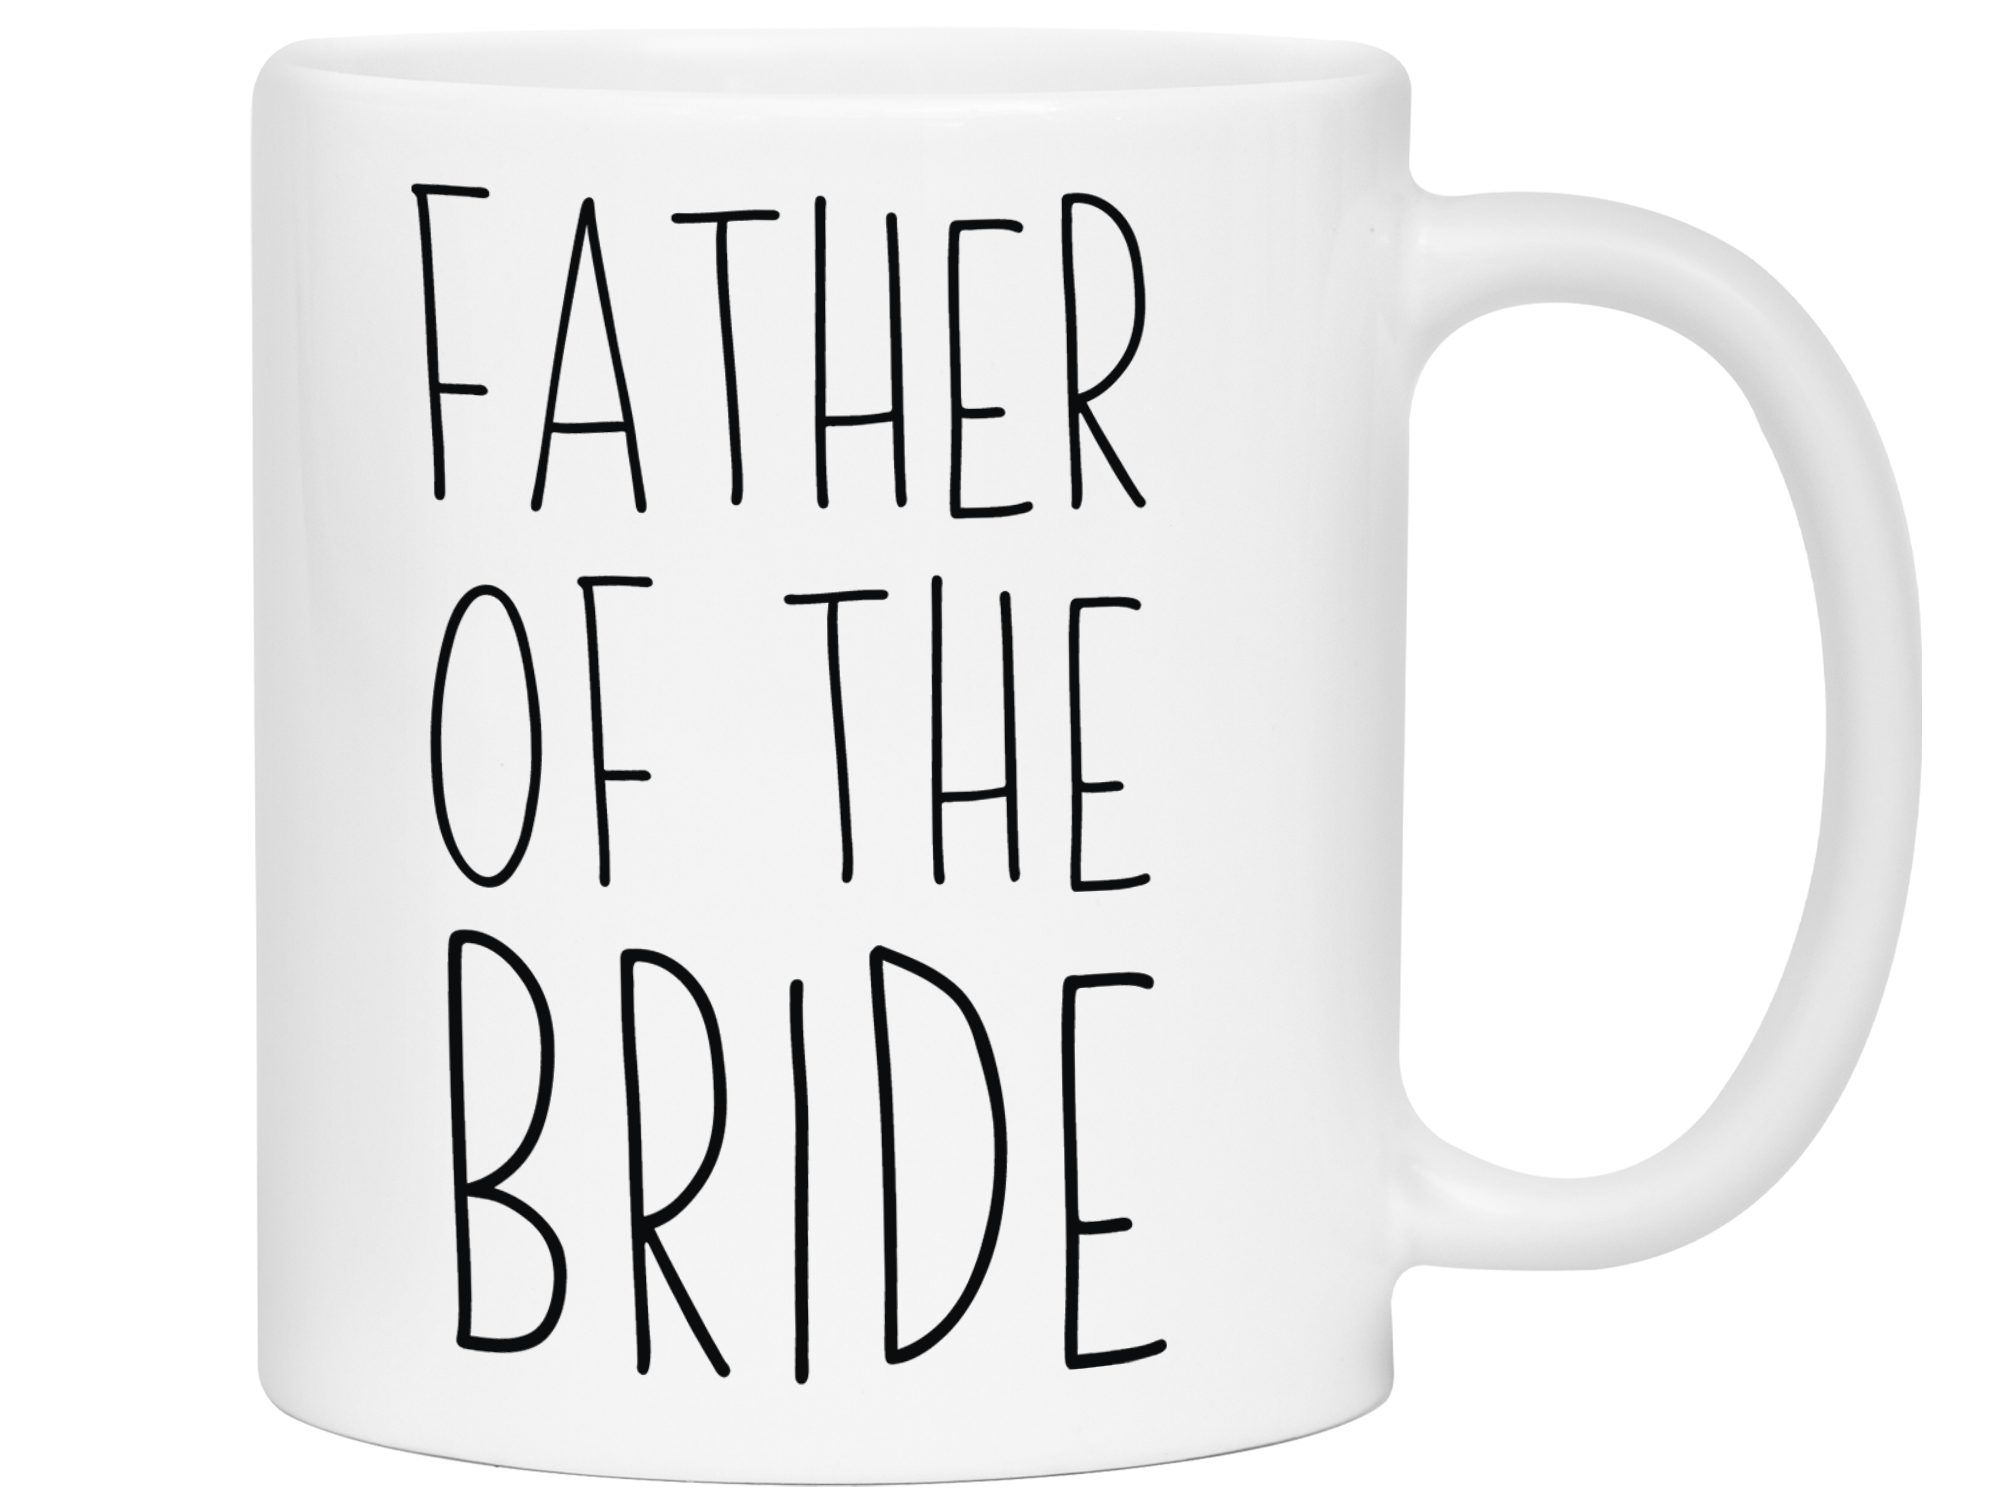 Father Of The Bride Coffee Mug Tea Cup - Wedding Gift Idea